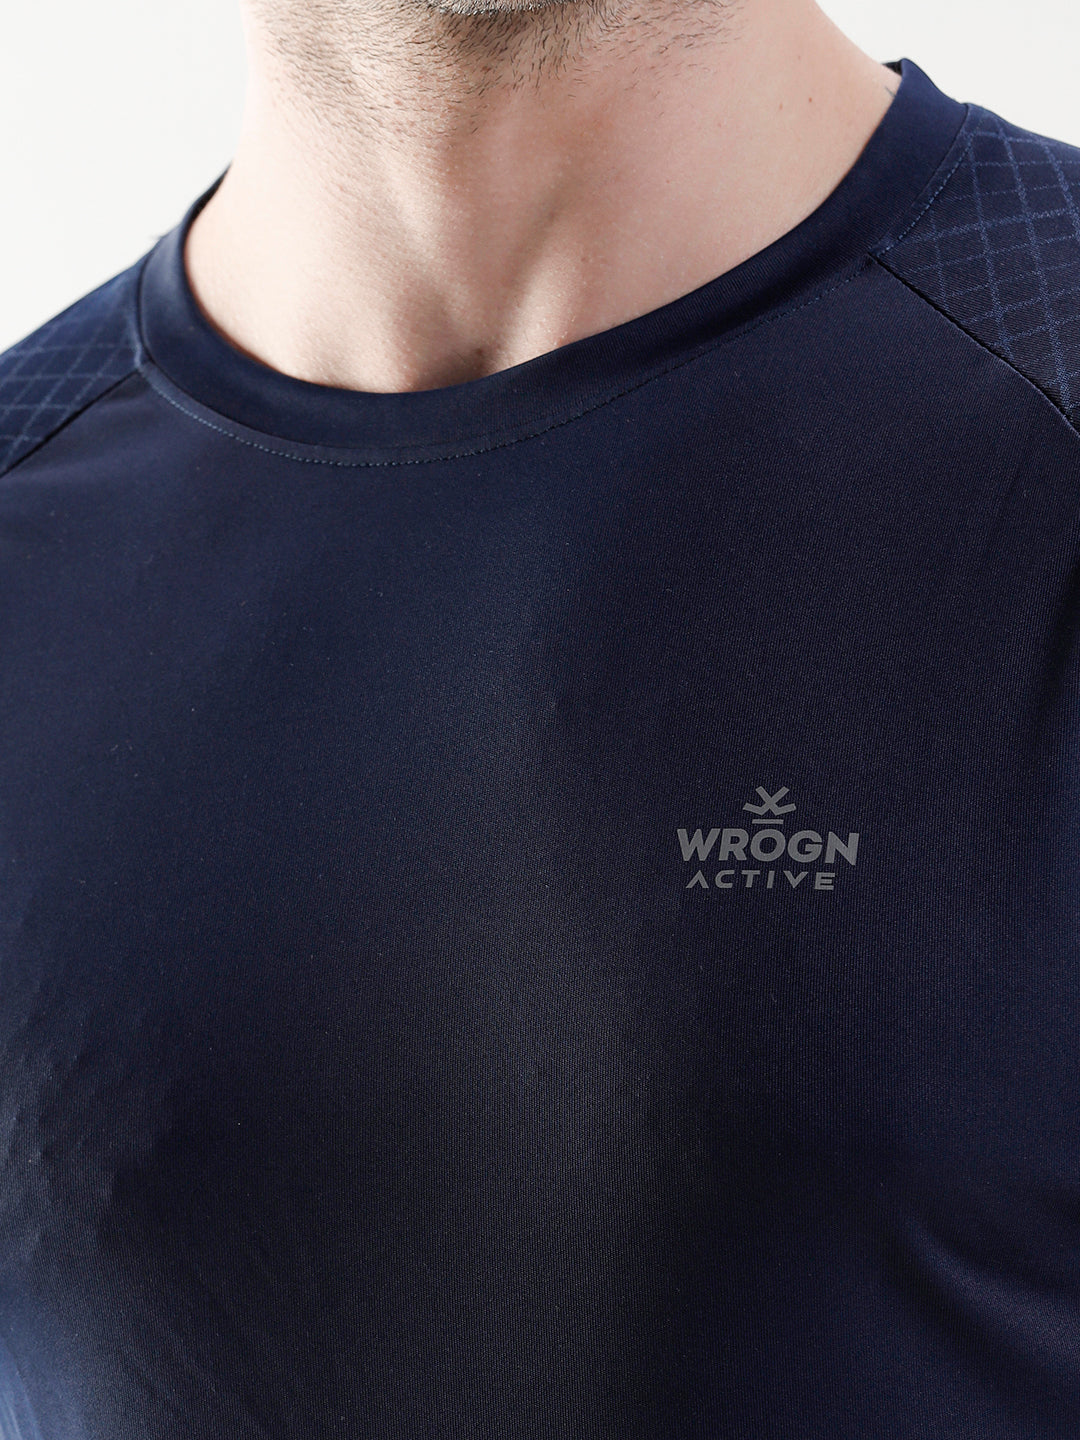 Wrogn Active Raglan T-Shirt